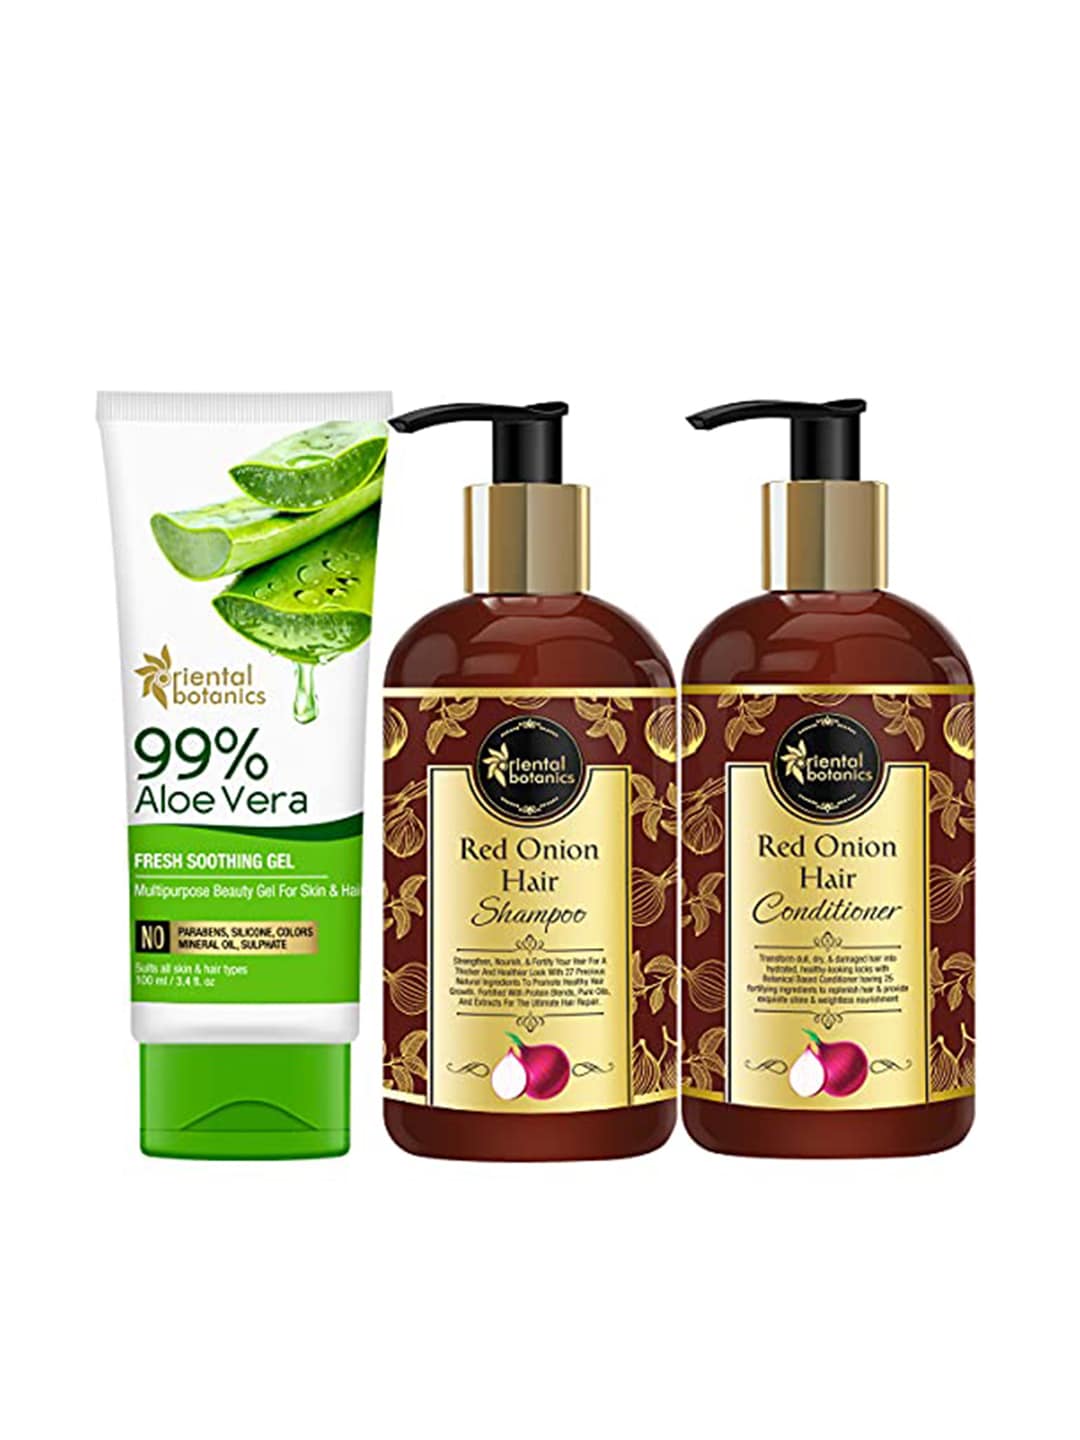 Oriental Botanics Red Onion Shampoo & Conditioner & Aloe Vera Gel 700 g Price in India